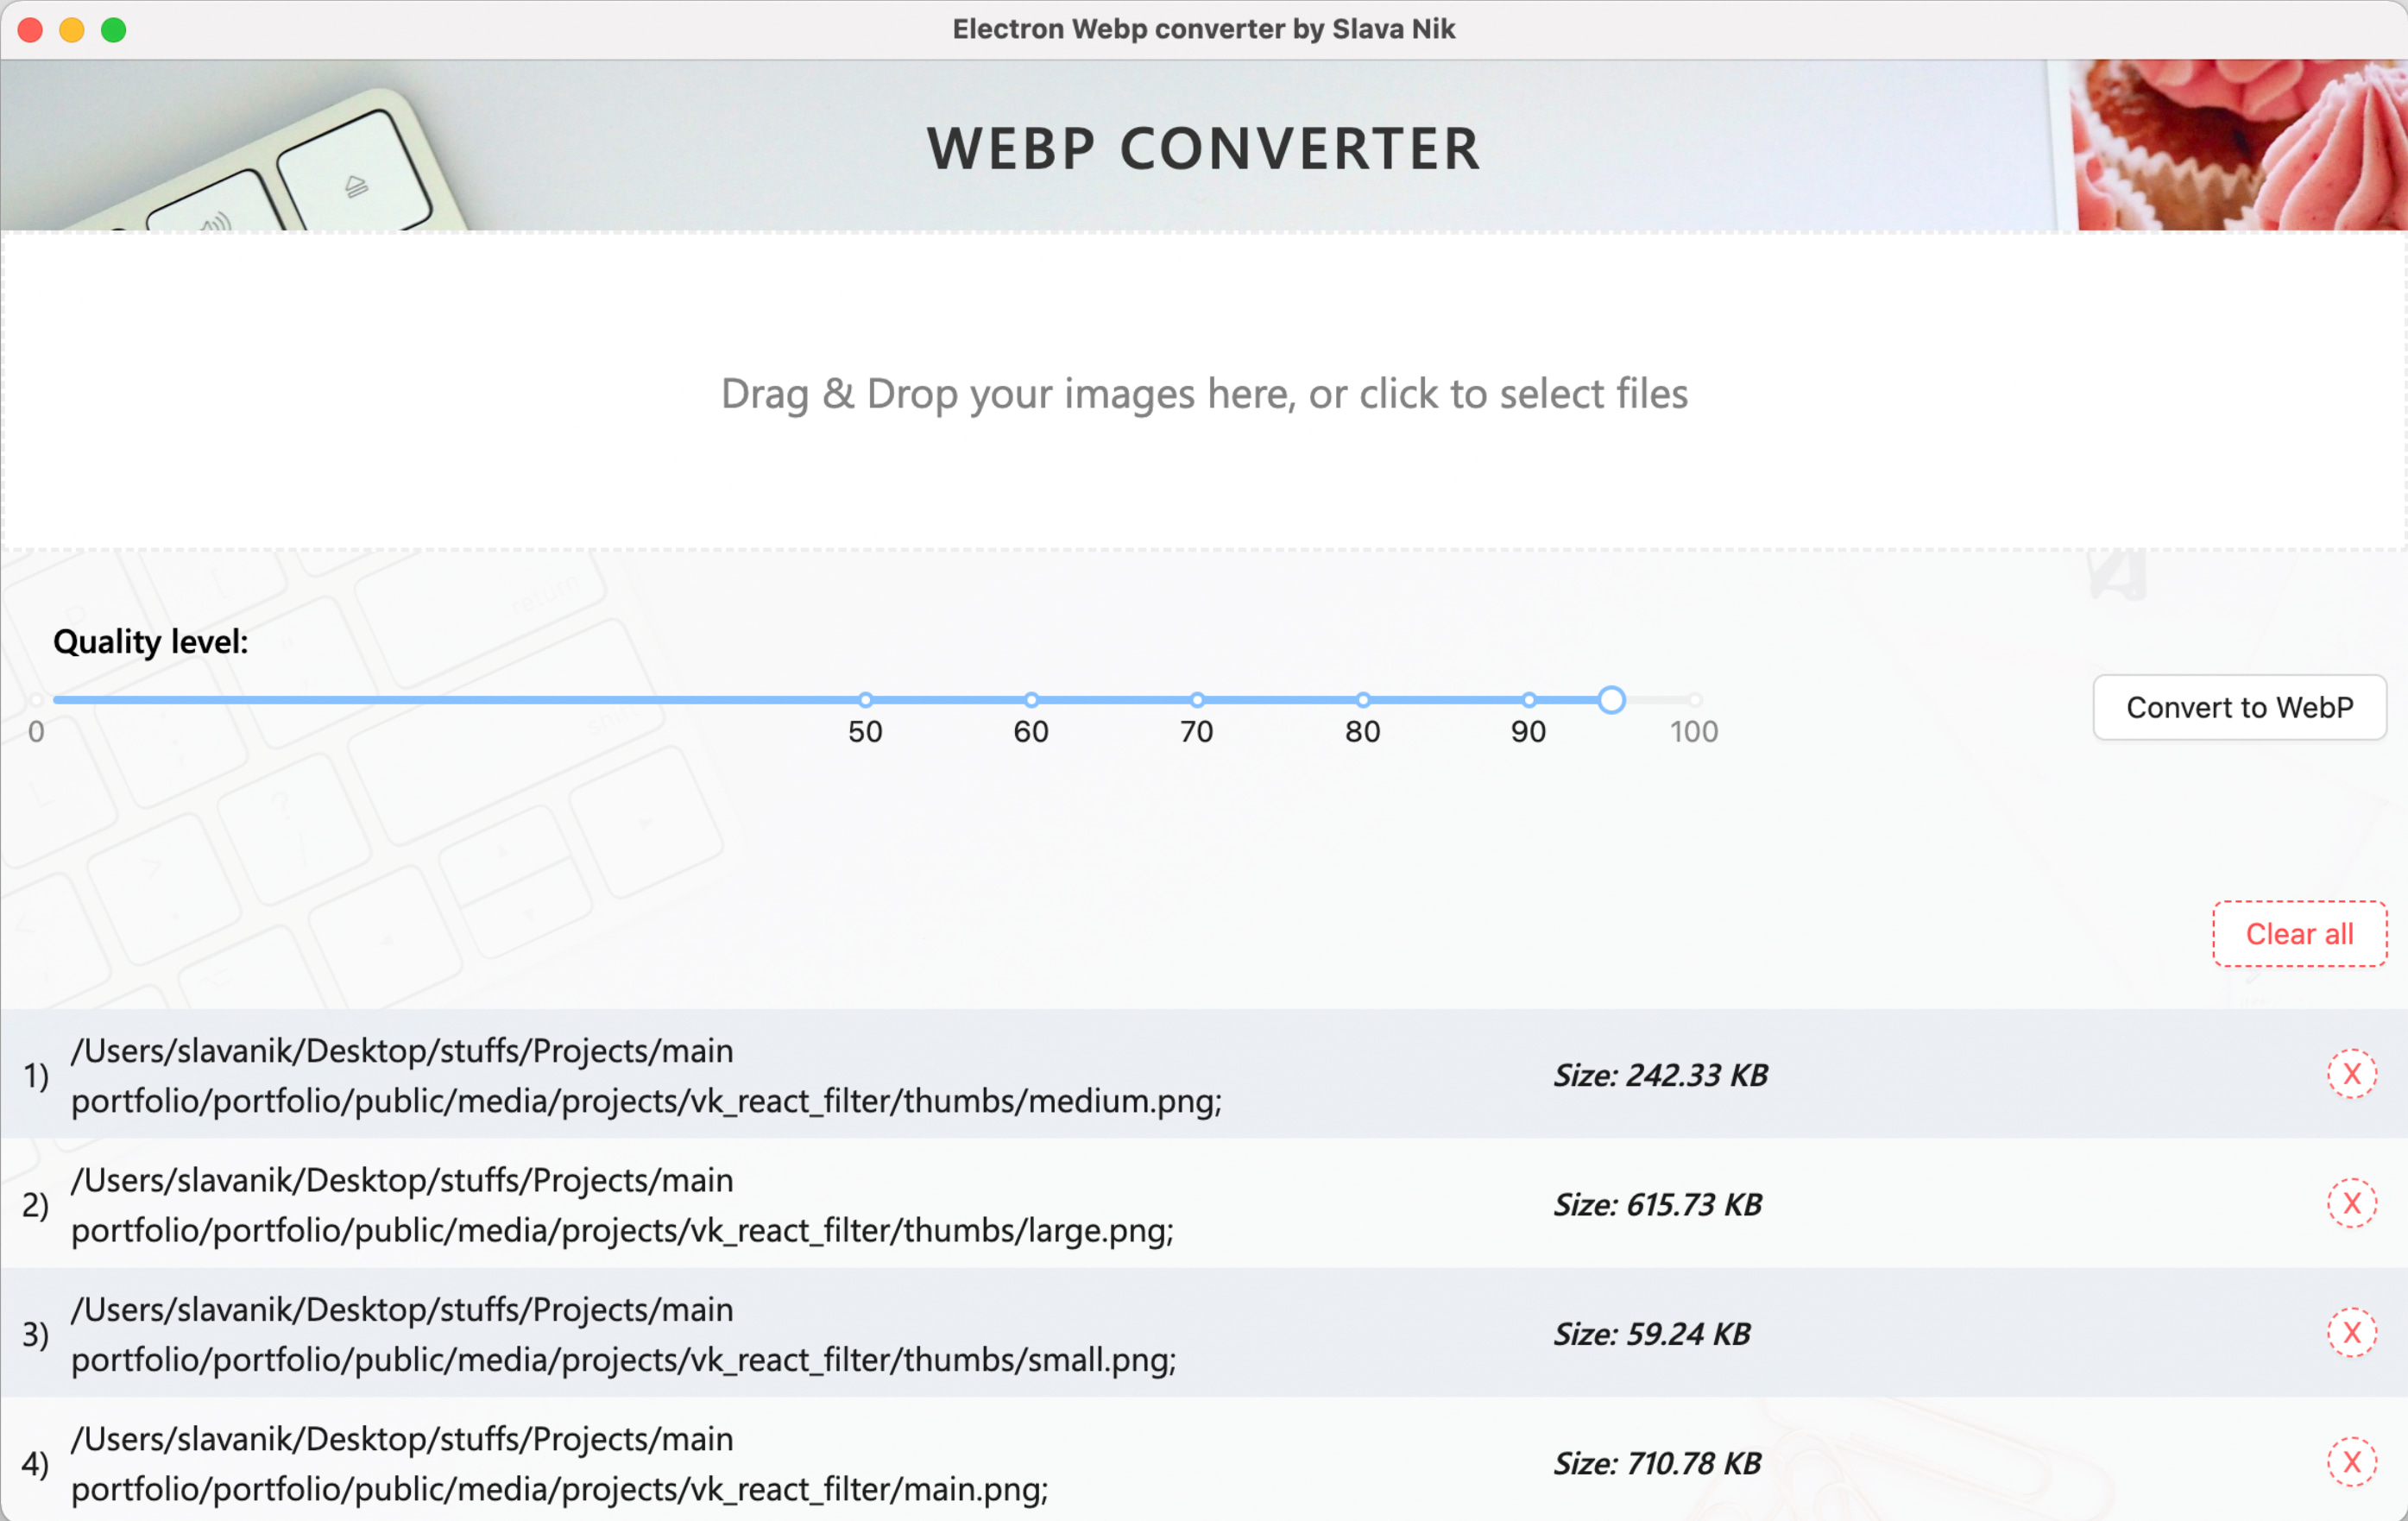 WebP converter - Electron desktop app